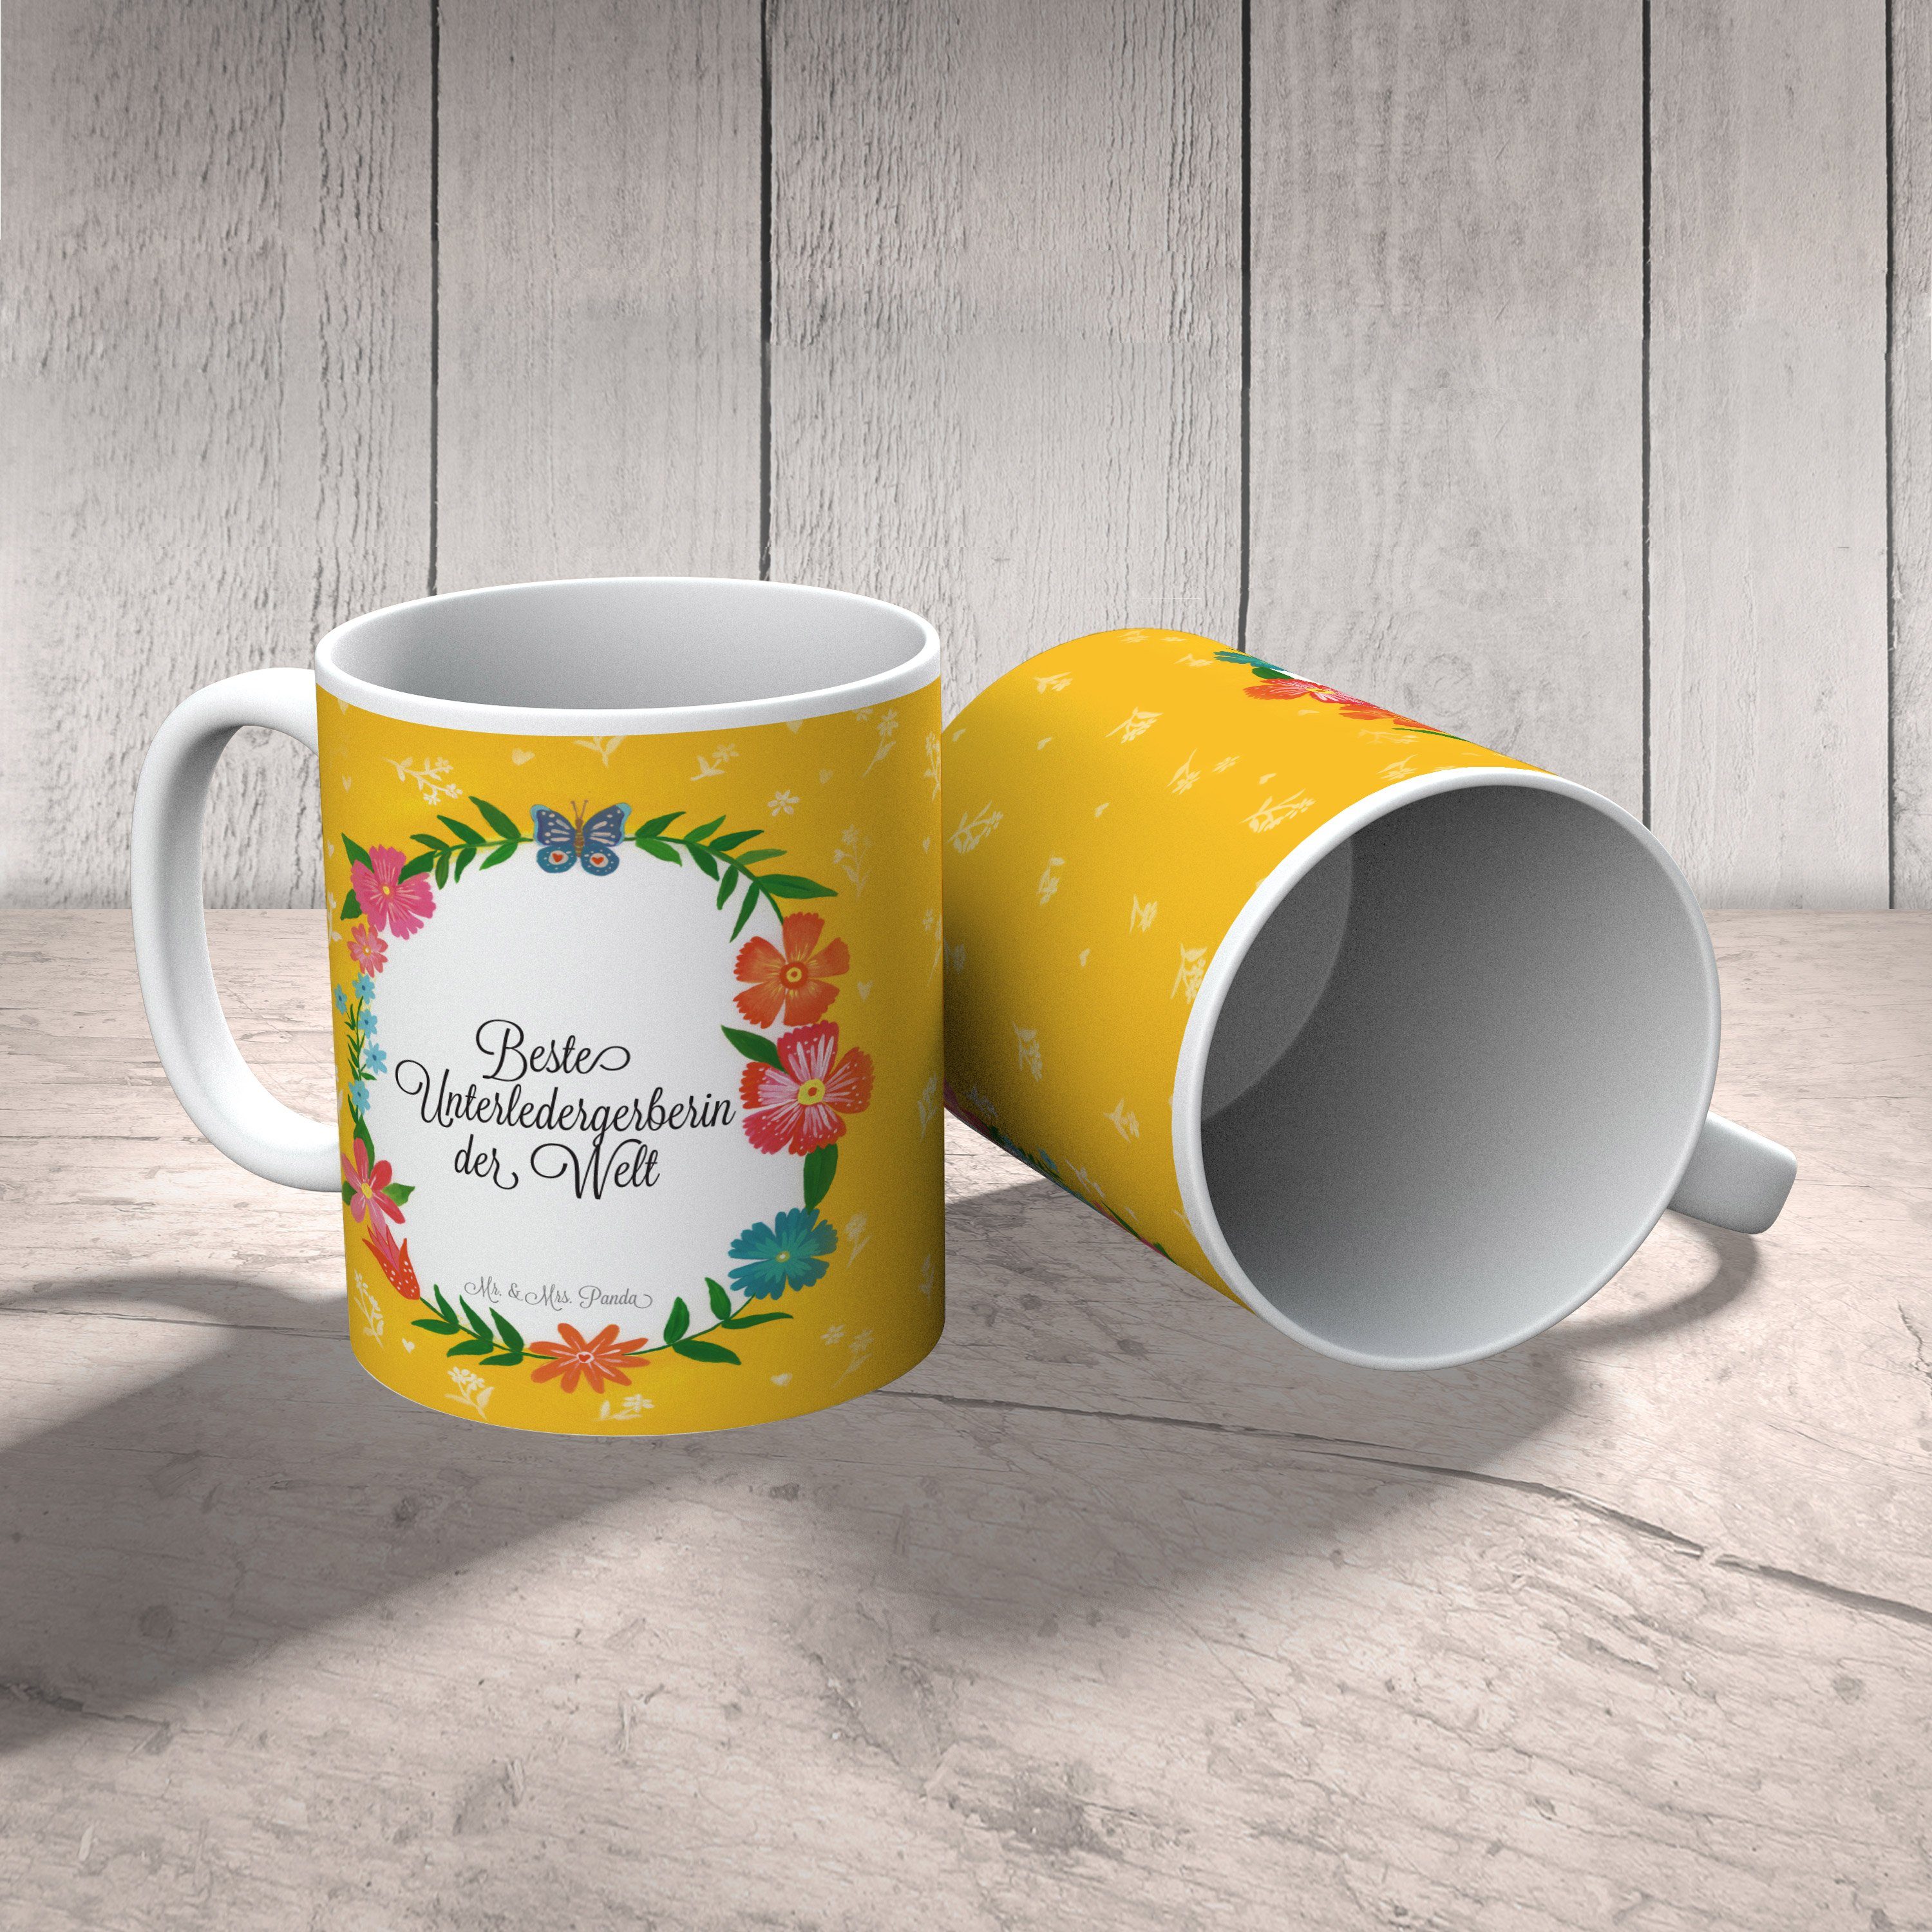 Mr. & Mrs. Panda Tasse, Geschenk - Keramik Kaffeetasse, Unterledergerberin Tasse Studium, Geschenk